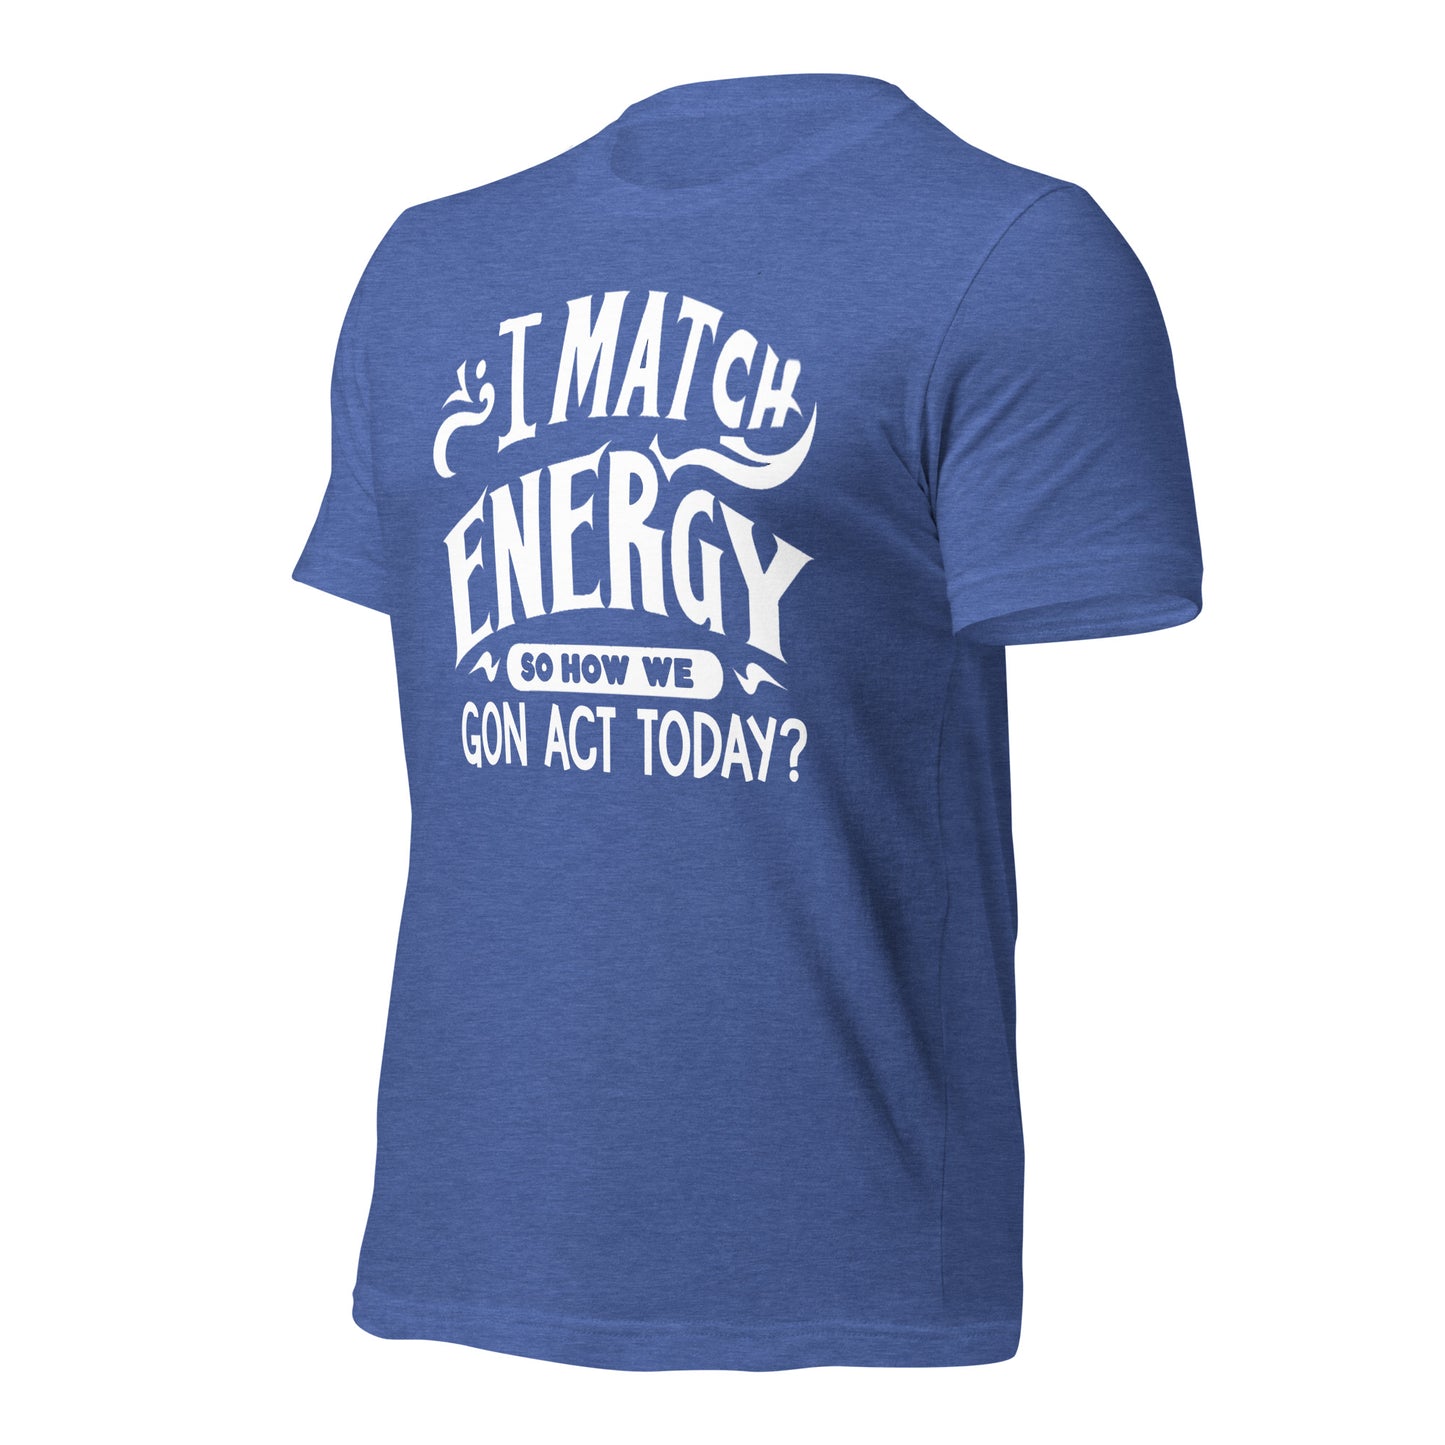 I Match Energy Quality Cotton Bella Canvas Adult T-Shirt